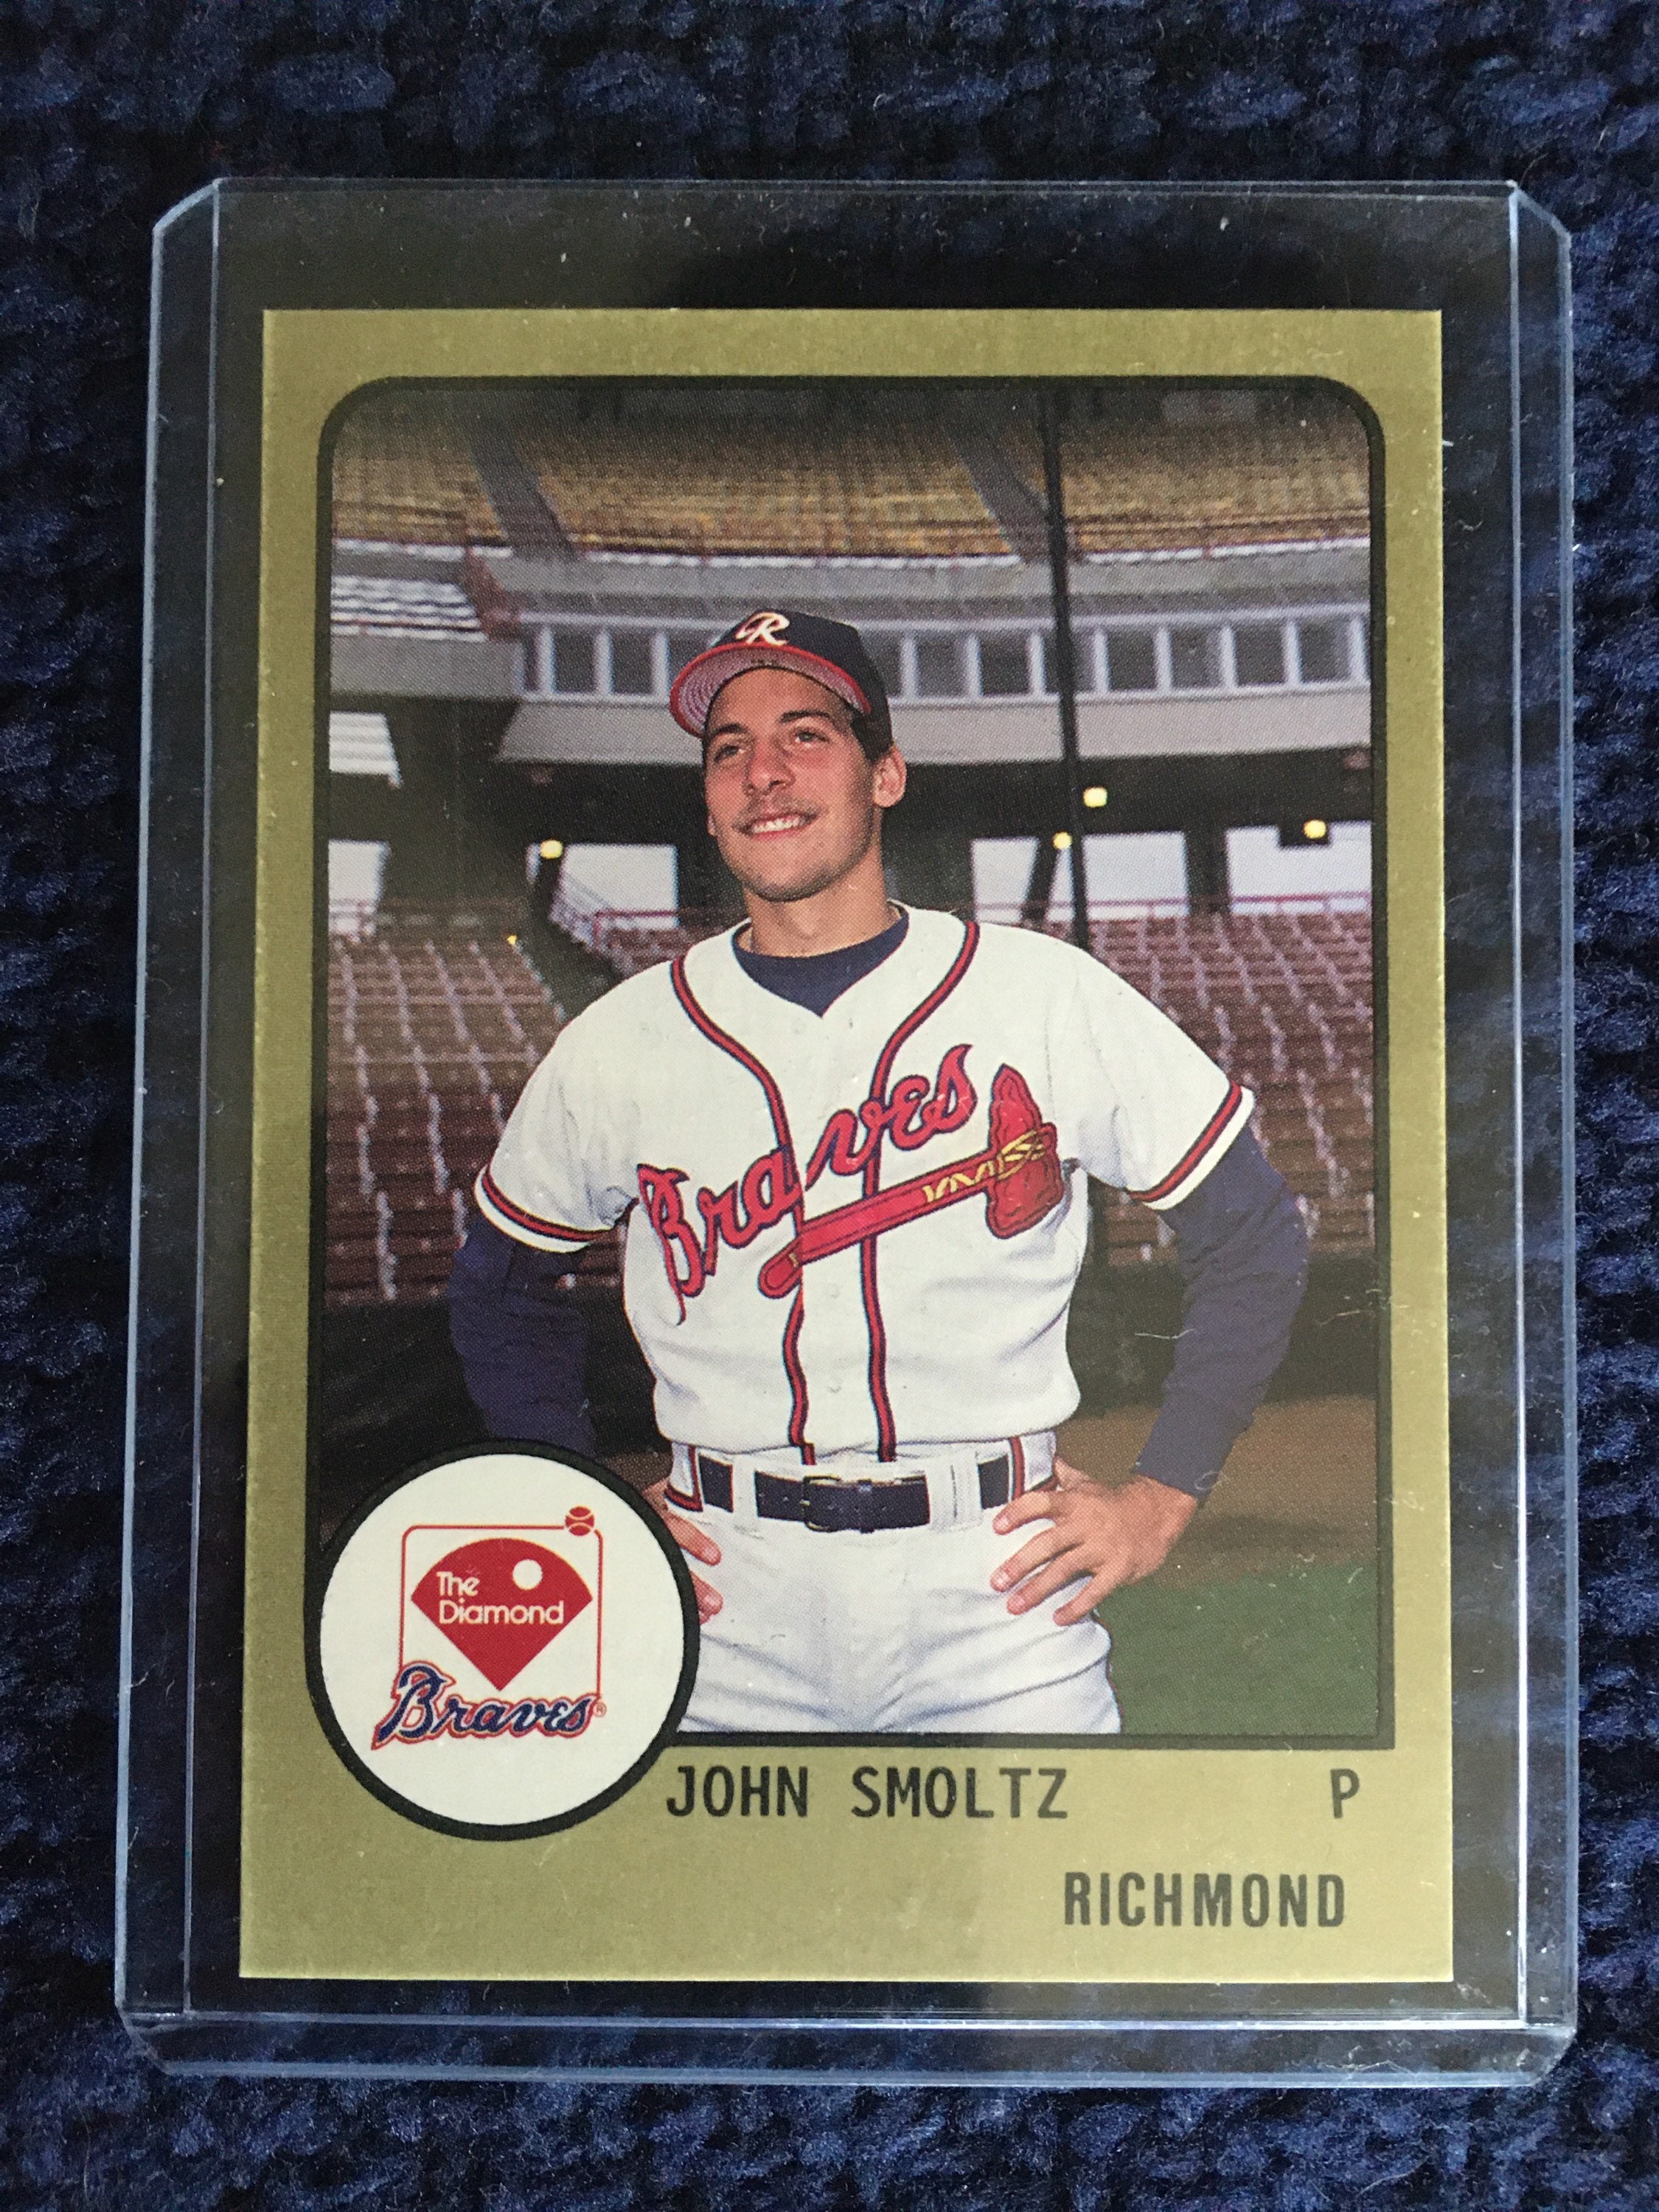 John Smoltz 1988 Richmond Braves Baseball Card Procards Inc -  Israel